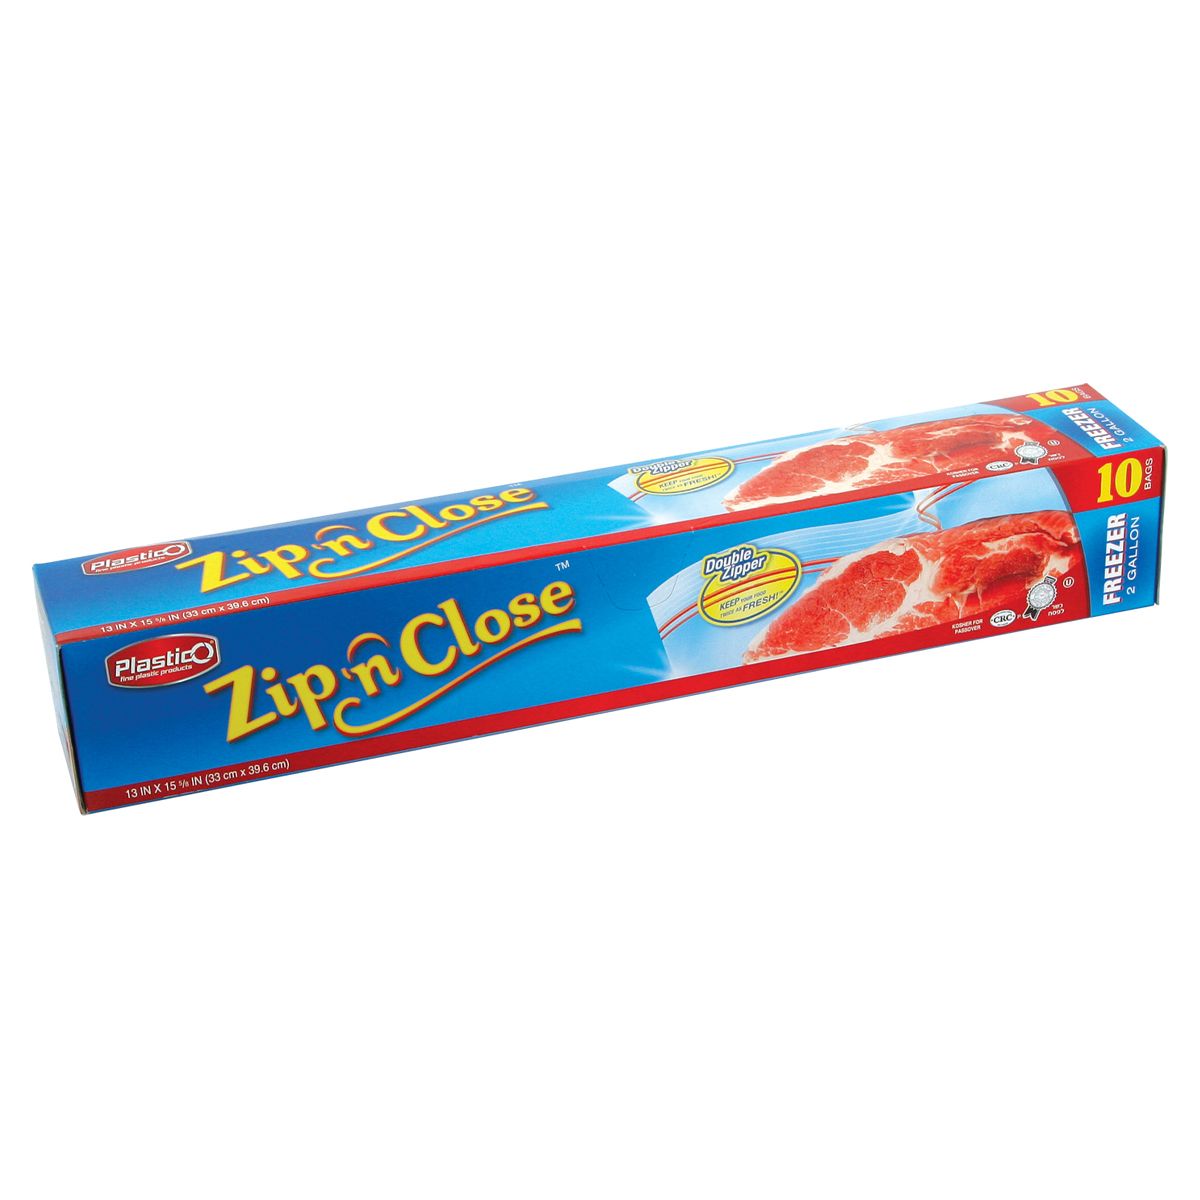 Ziploc Freezer Two Gallon Bags, 10 Ct